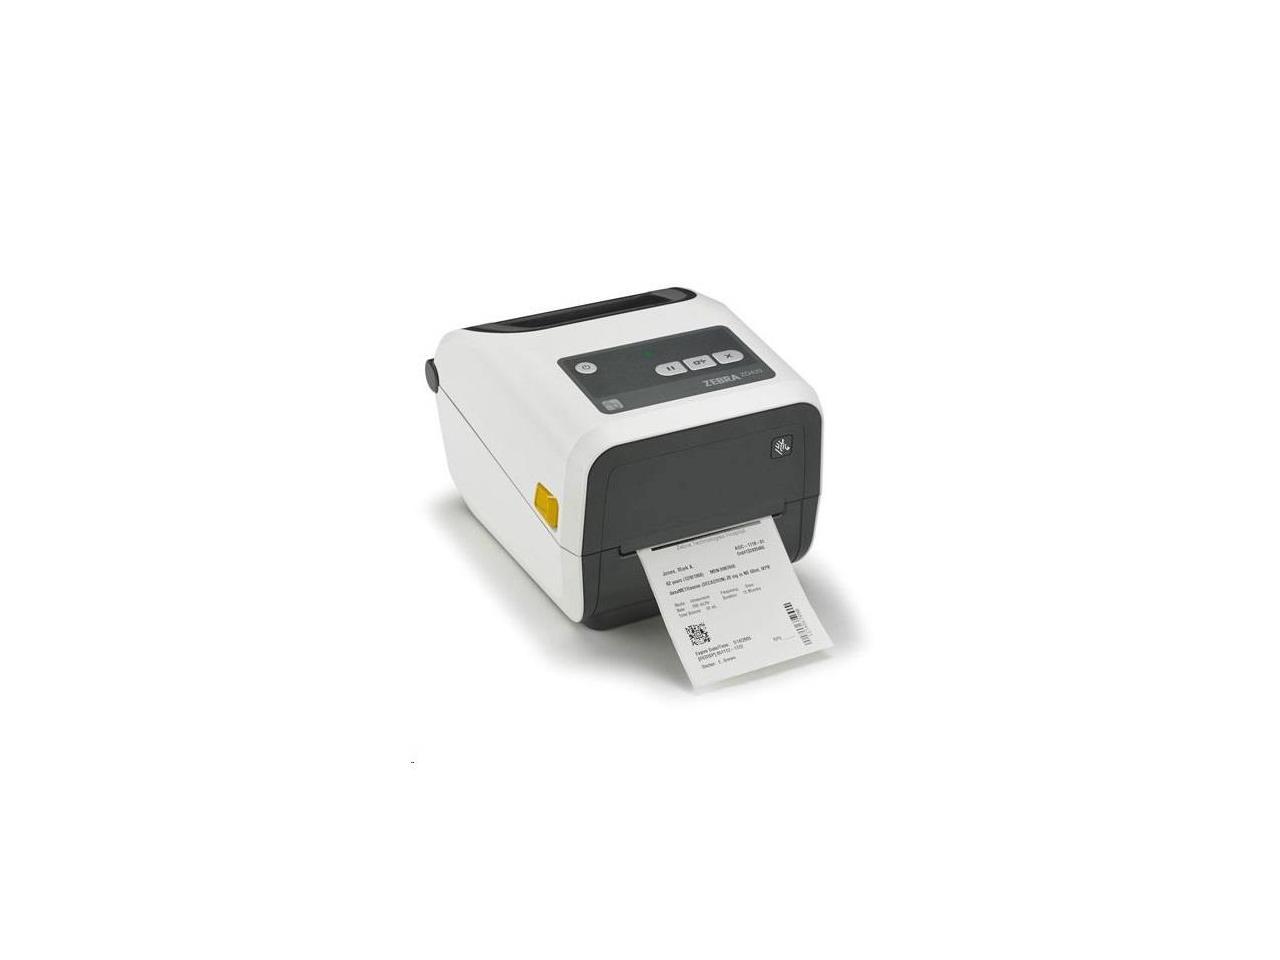 Zebra Zd420 Series 4 Thermal Transfer Label Printer For Healthcare 203 Dpi Usb Bluetooth Le 6978